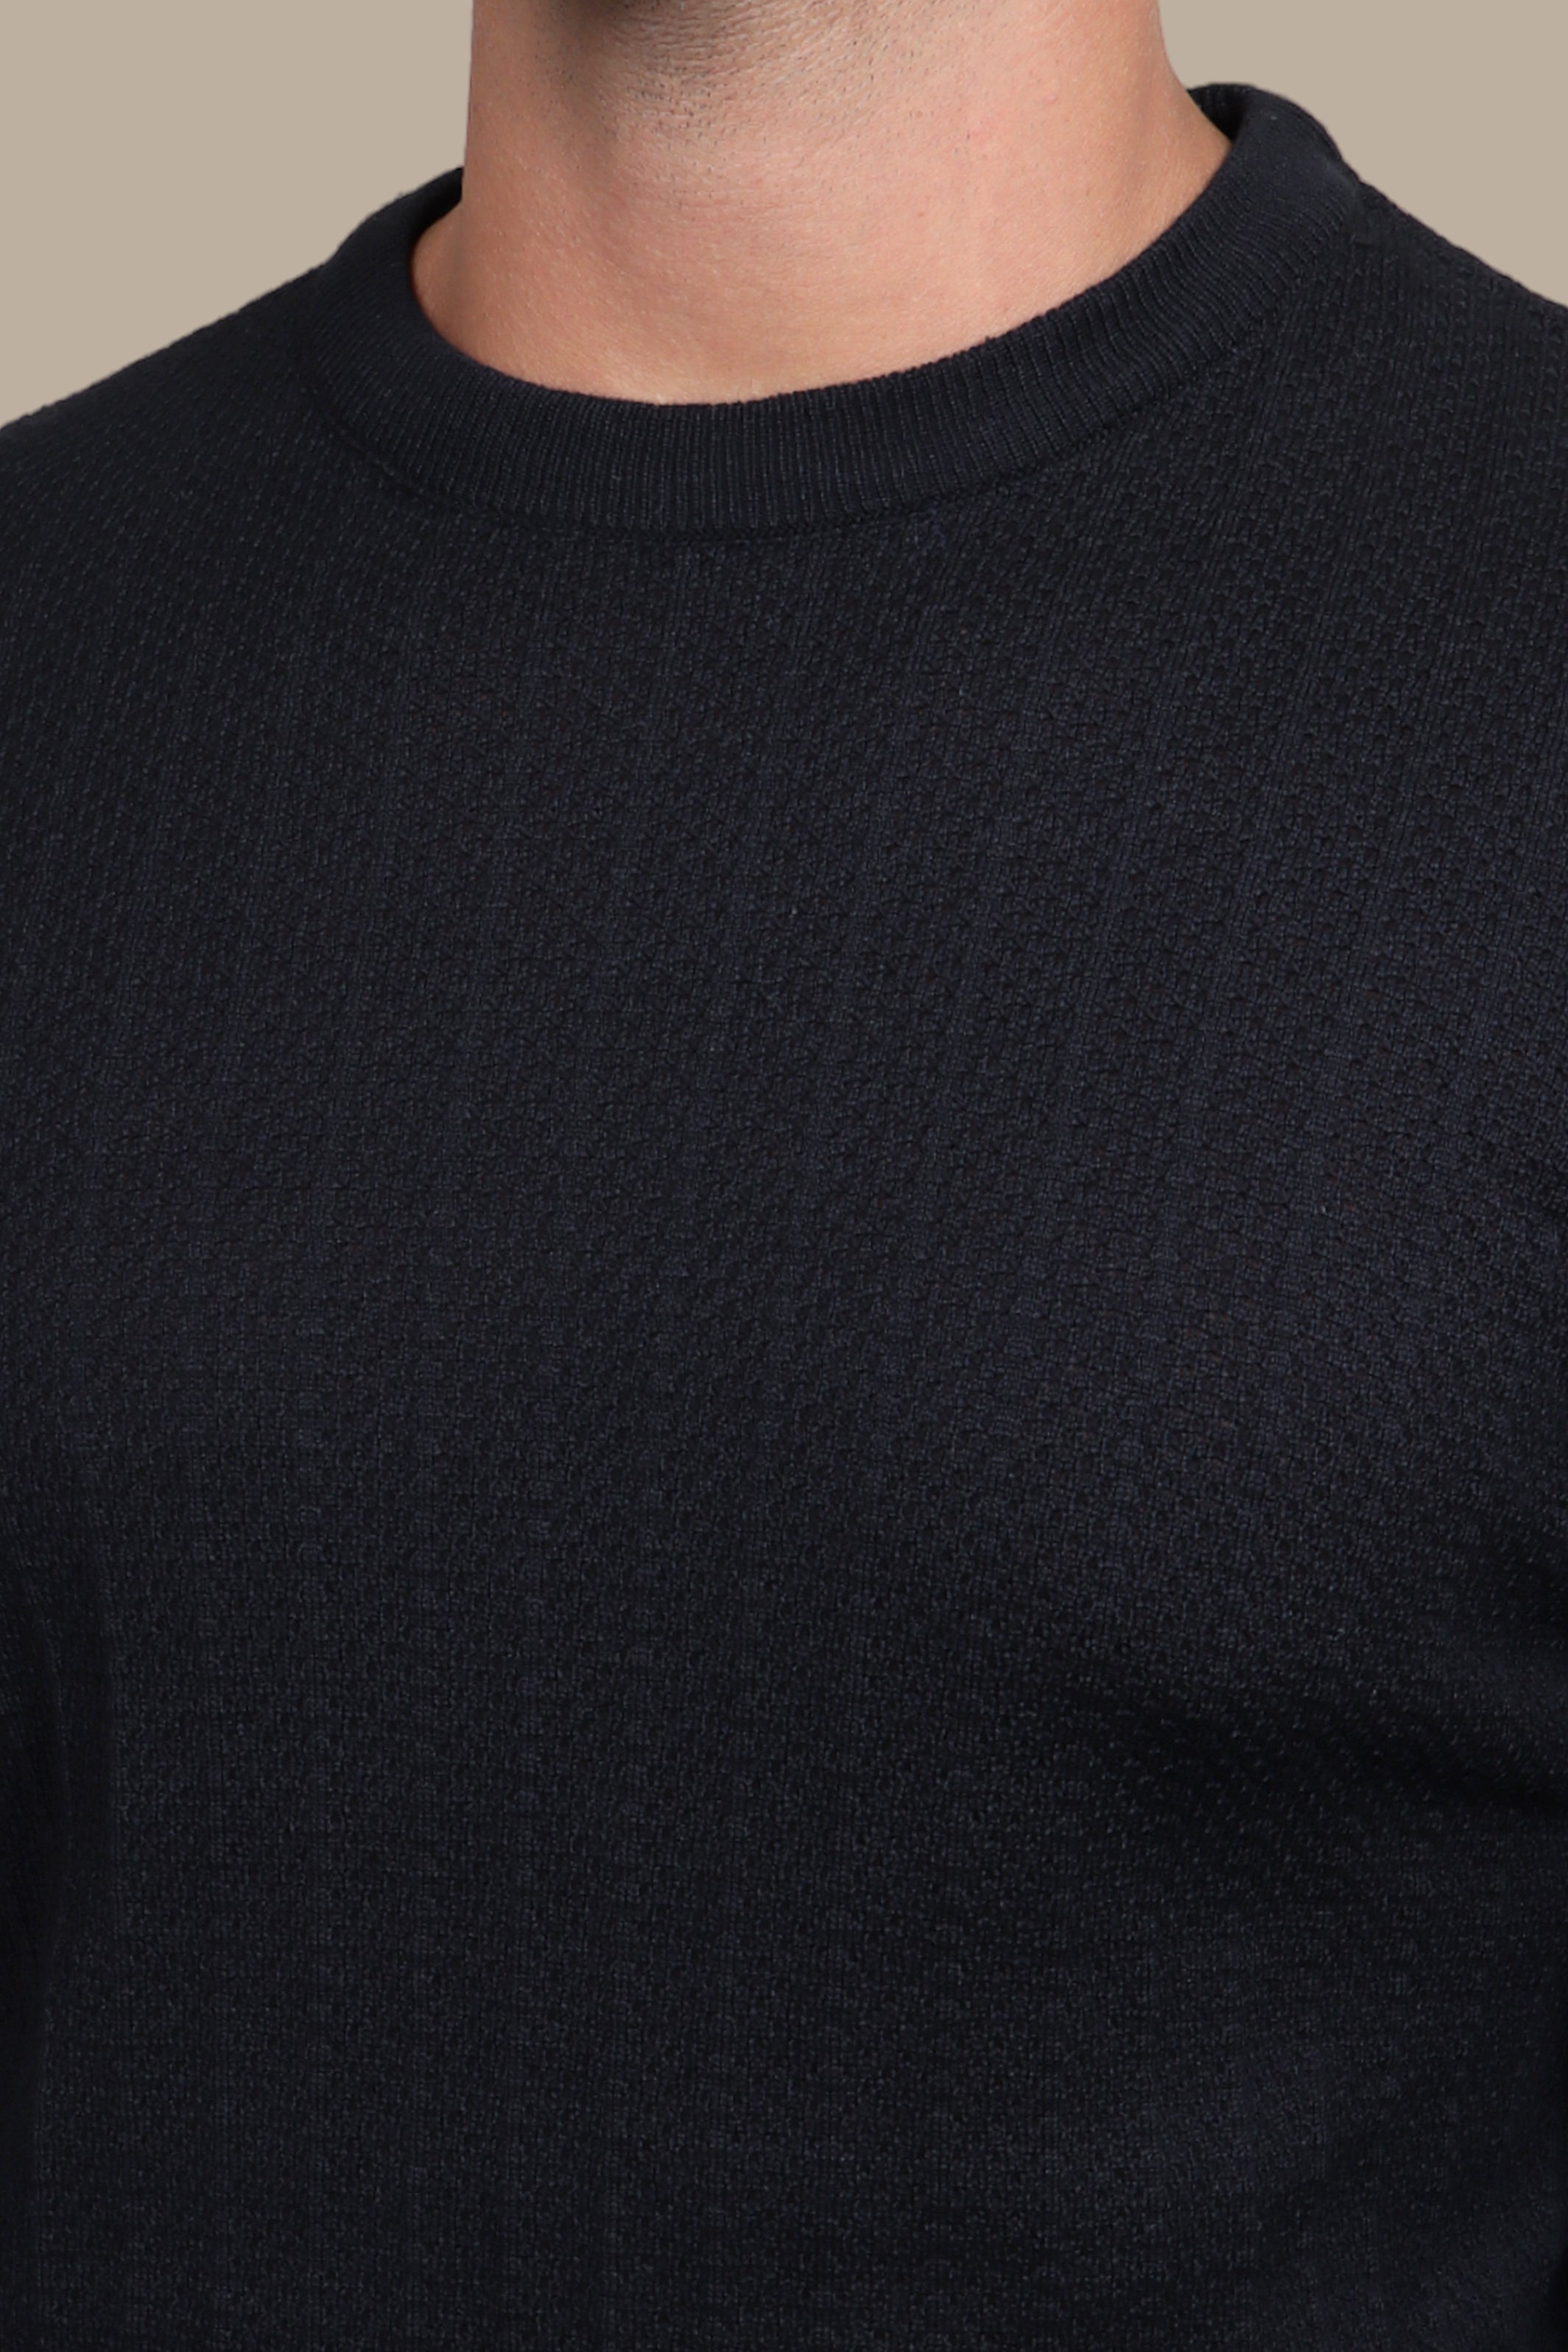 Black & Bold: Striped Round Neck Structured Sweater